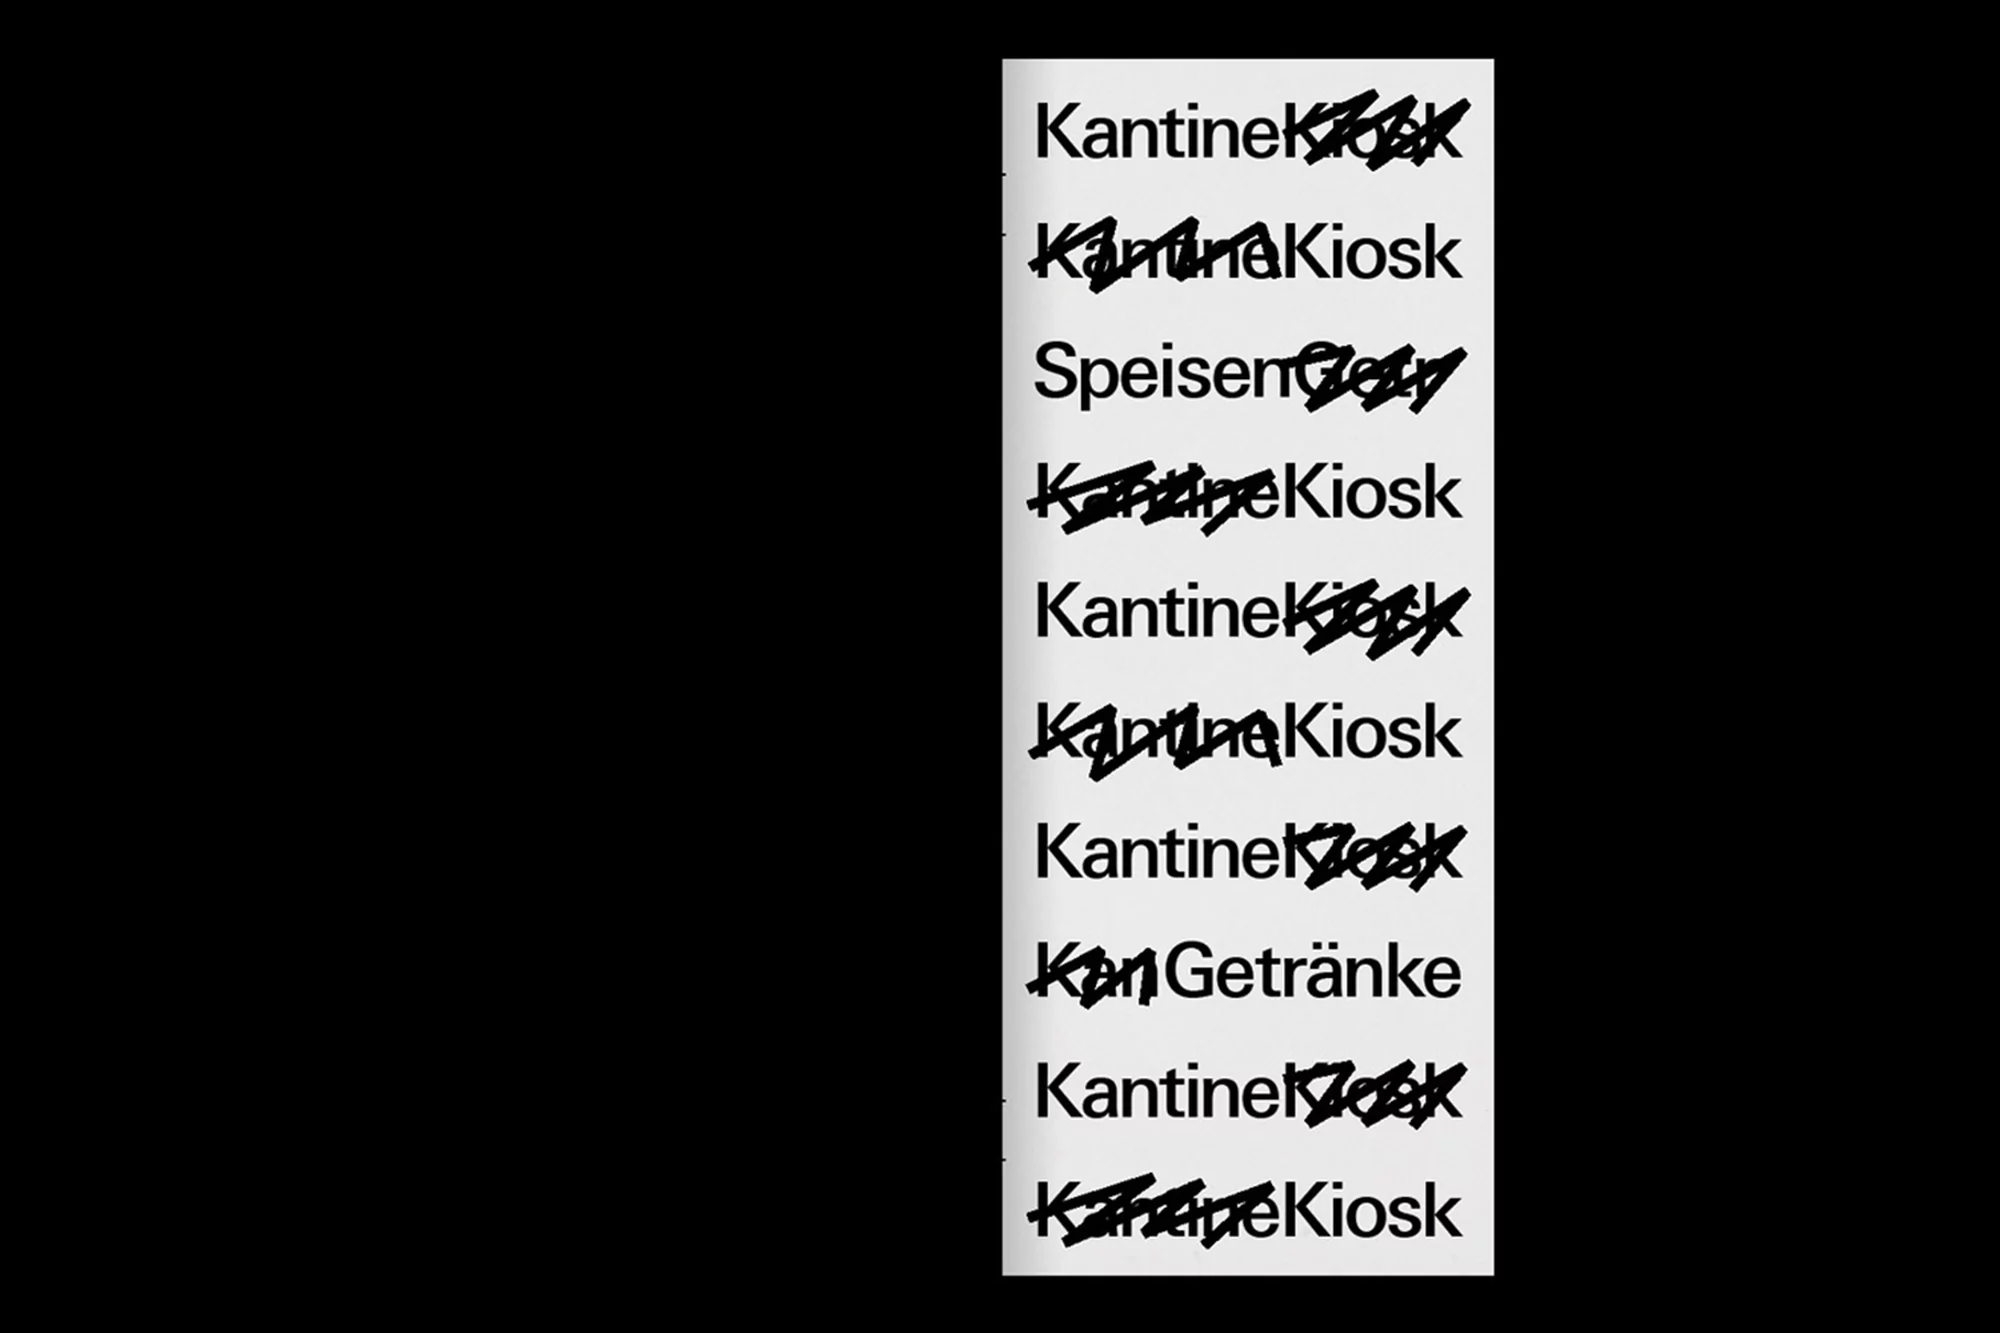 Kantine Kiosk by Daily Dialogue